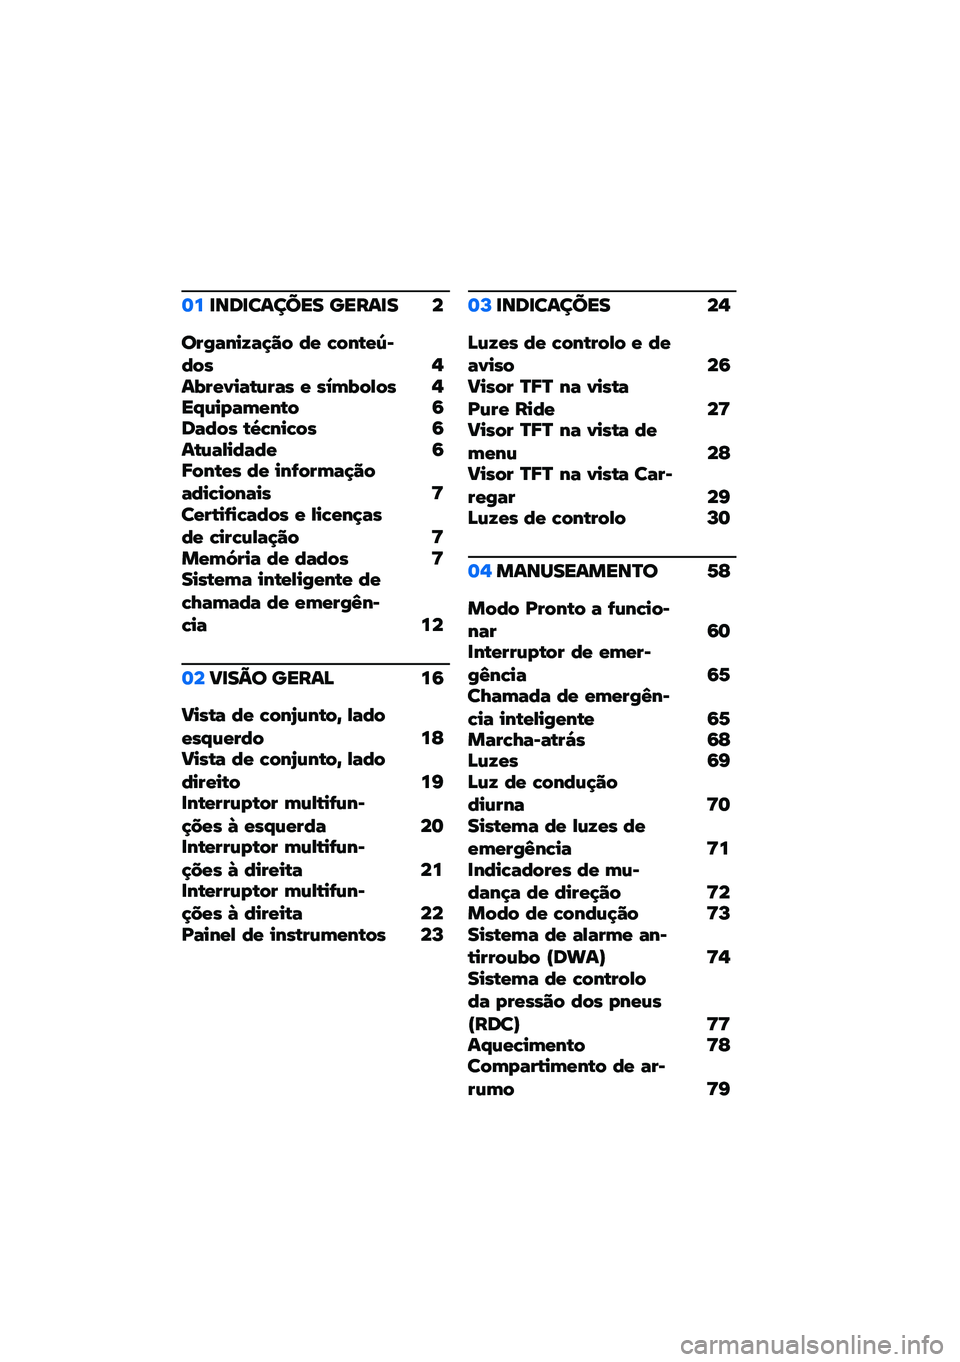 BMW MOTORRAD CE 04 2021  Manual do condutor (in Portuguese) �	��
���
������ �����
� �
��������� �!�" �#�$ �%�"��&�$��*�#�"�+ �,��.��$�/���&�(���+ �$ �+�0�2�.�"�3�"�+ �,��4�(��5��2�$��&�" �6���#�"�+ �&�8�%���%�"�+ �6��&�(